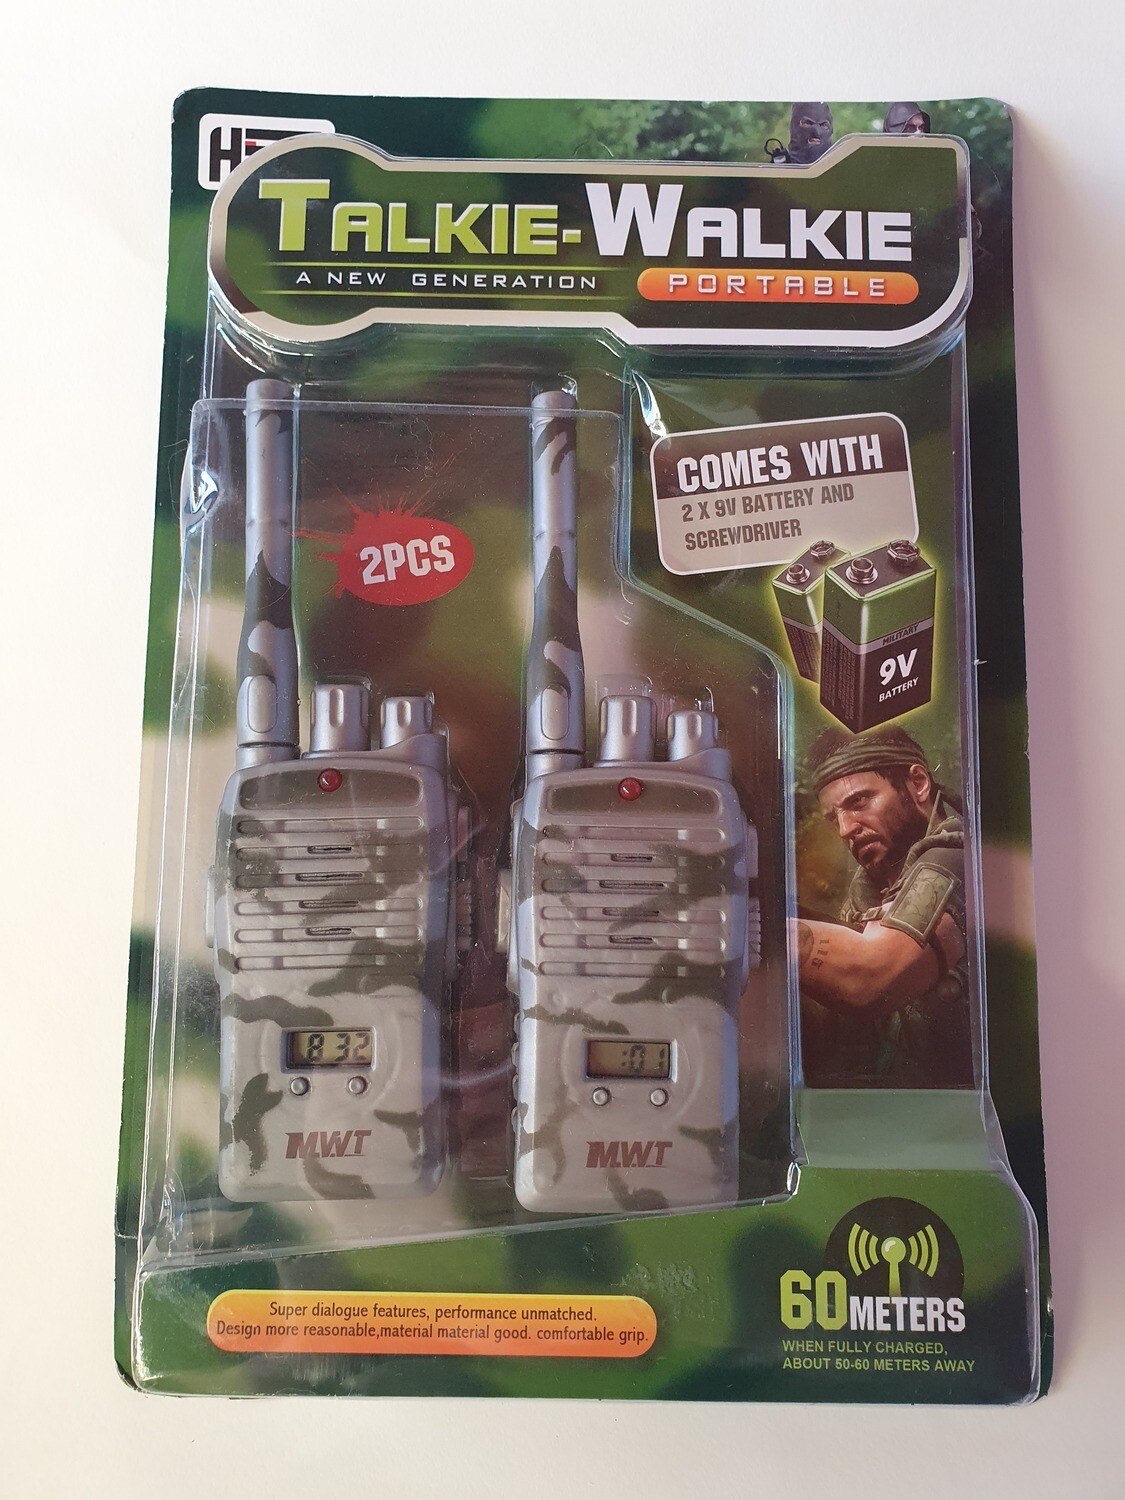 Racijos - Talkie walkie